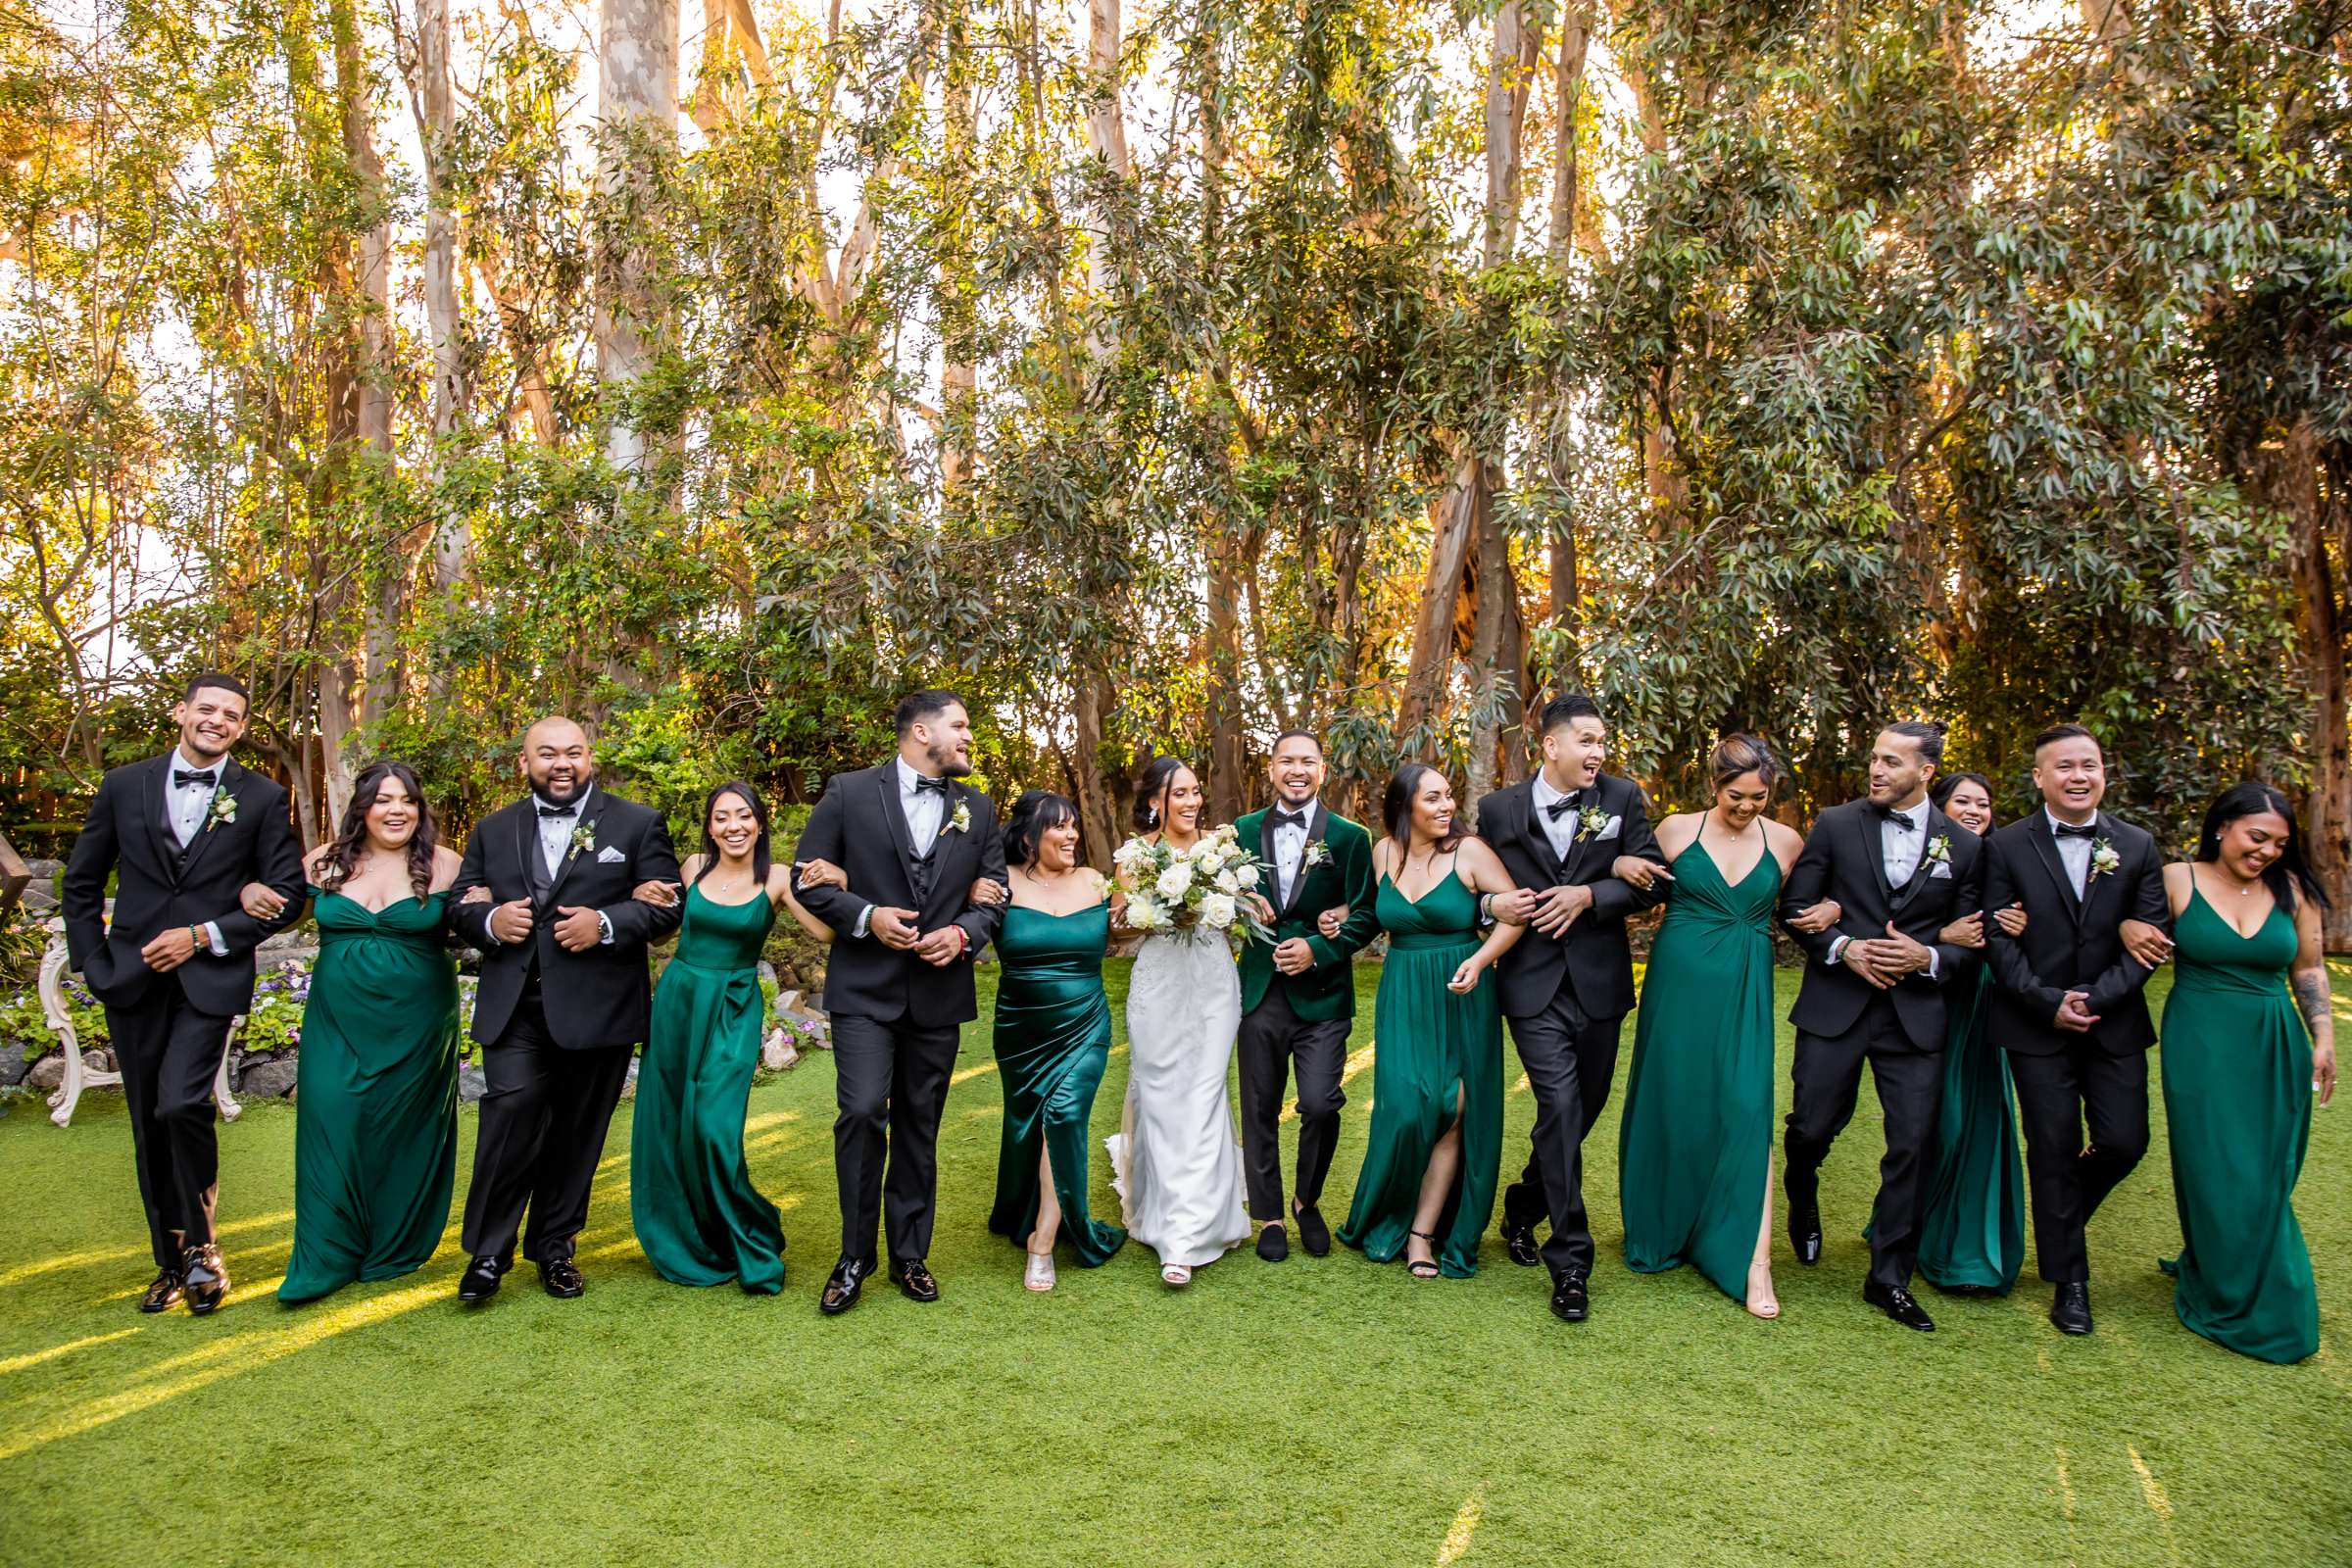 Twin Oaks House & Gardens Wedding Estate Wedding, Lottiesha and Christian Wedding Photo #13 by True Photography